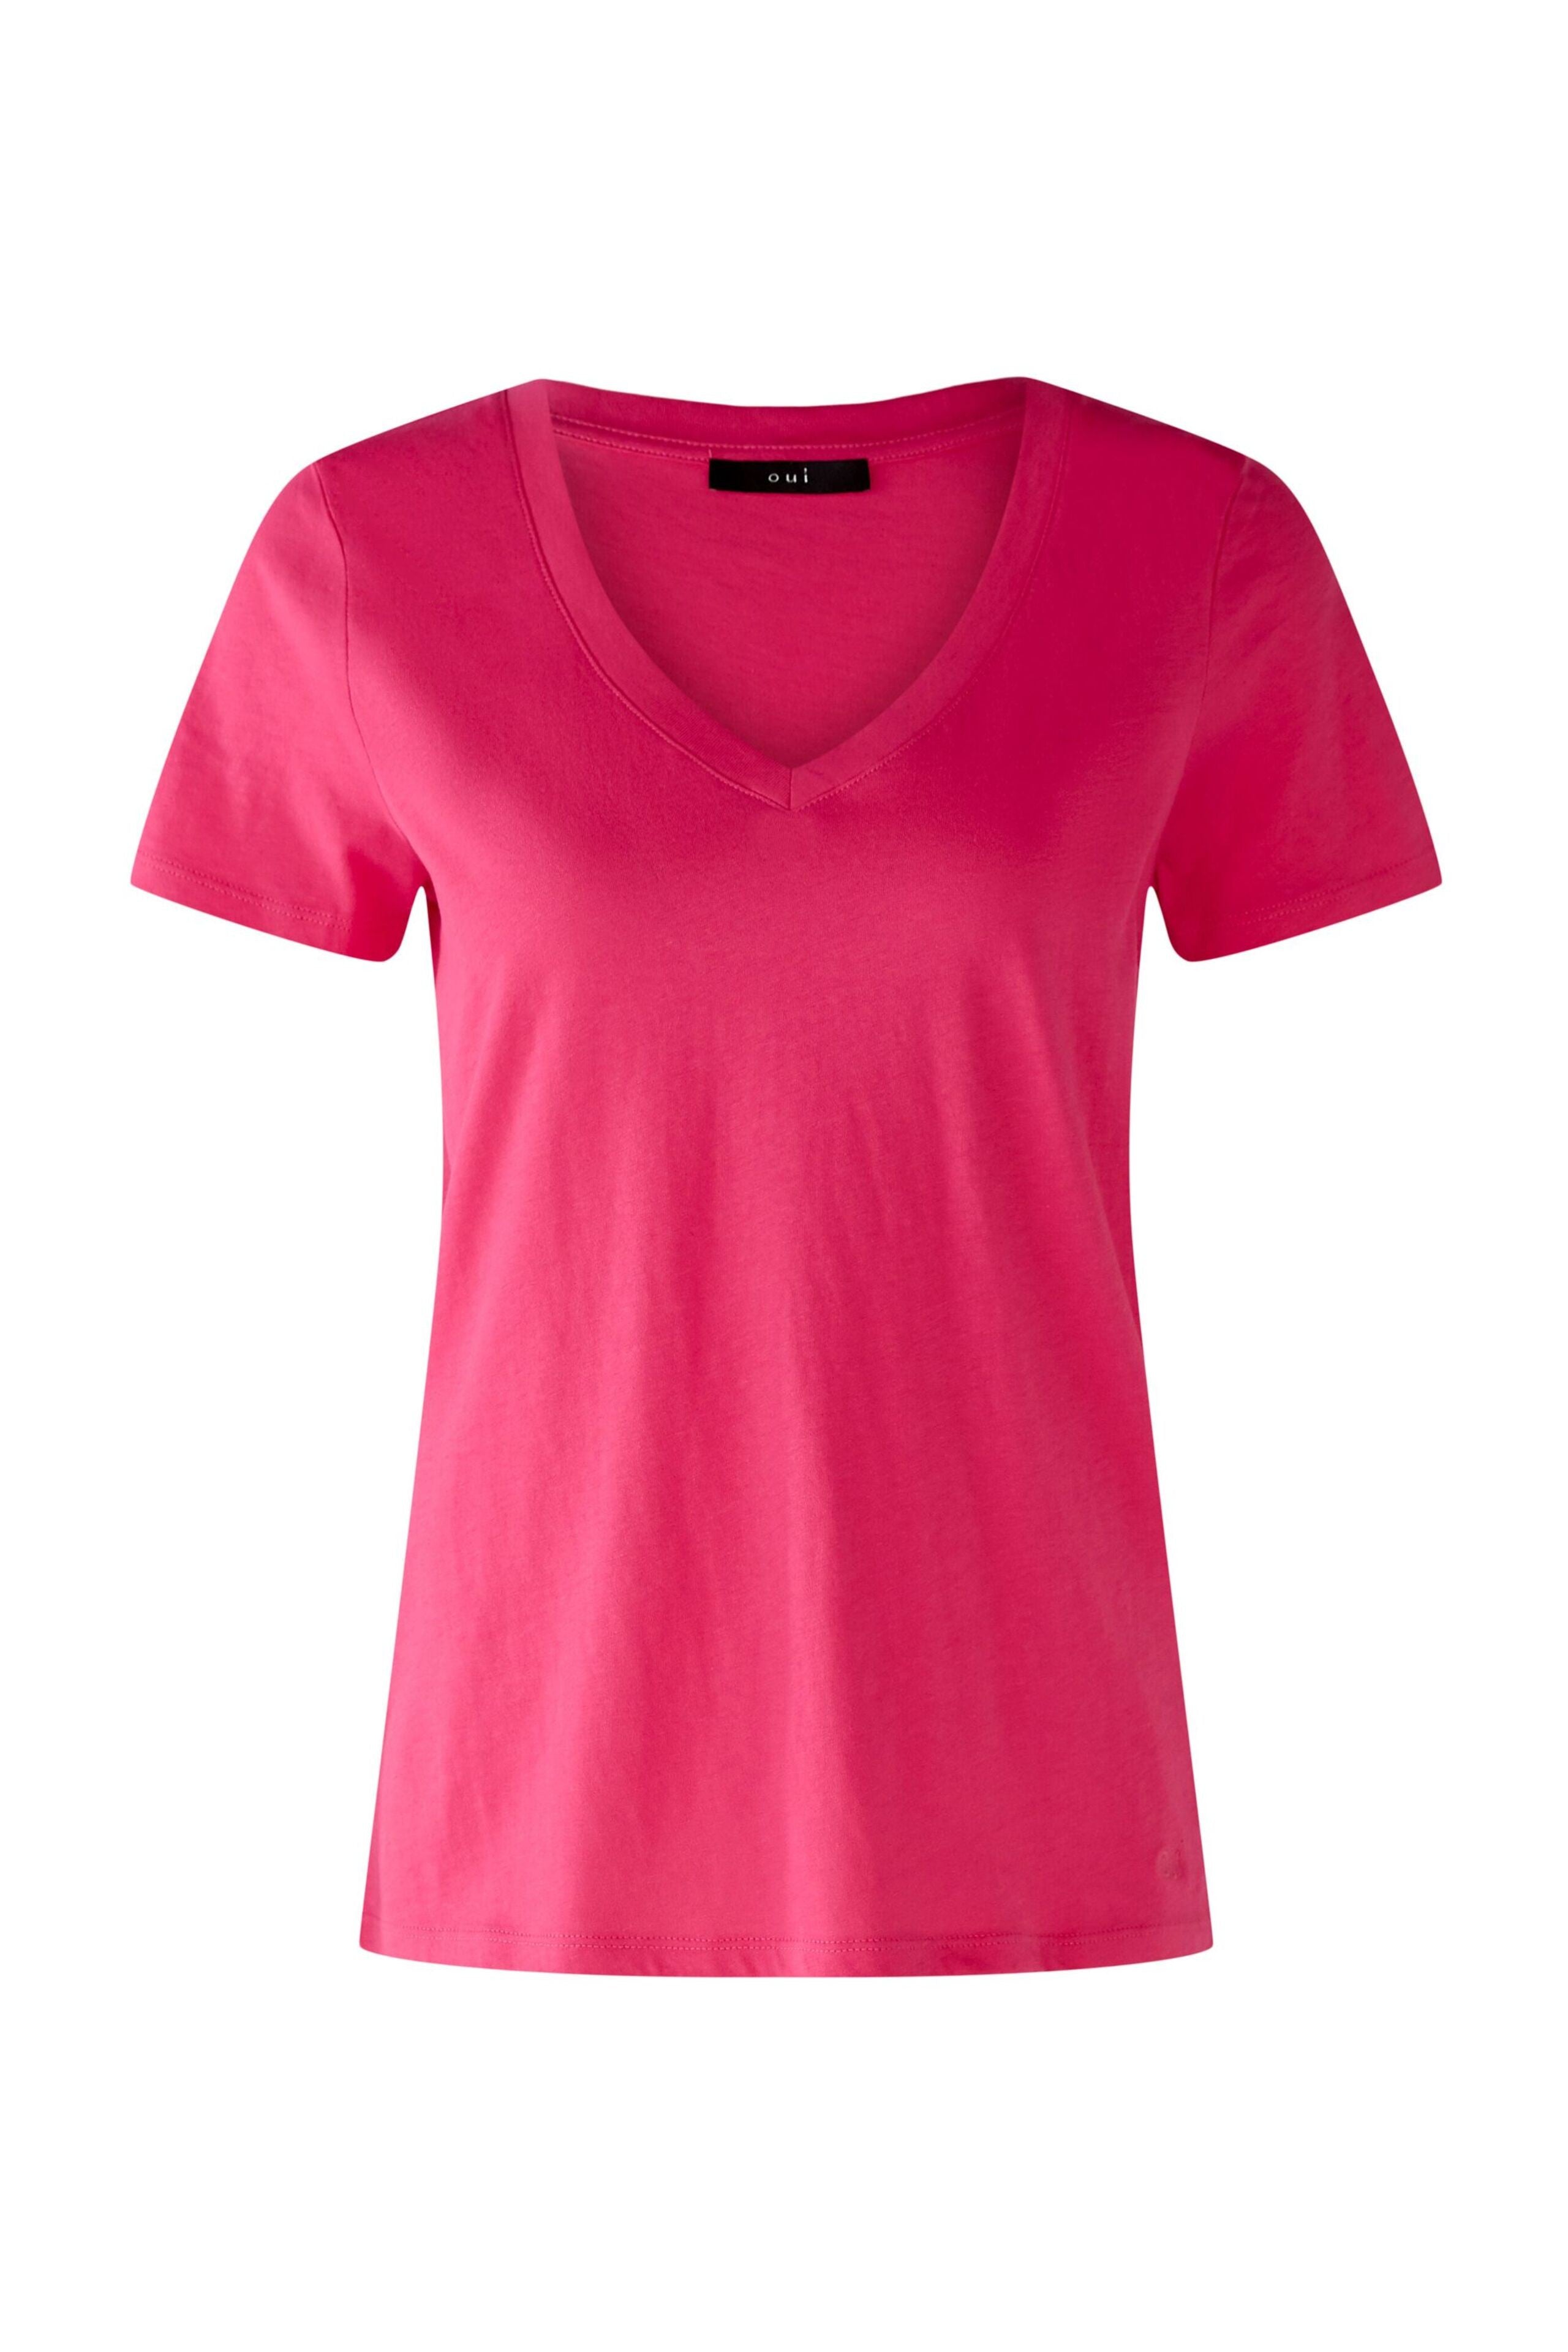 Oui Organic Cotton T-Shirt Pink